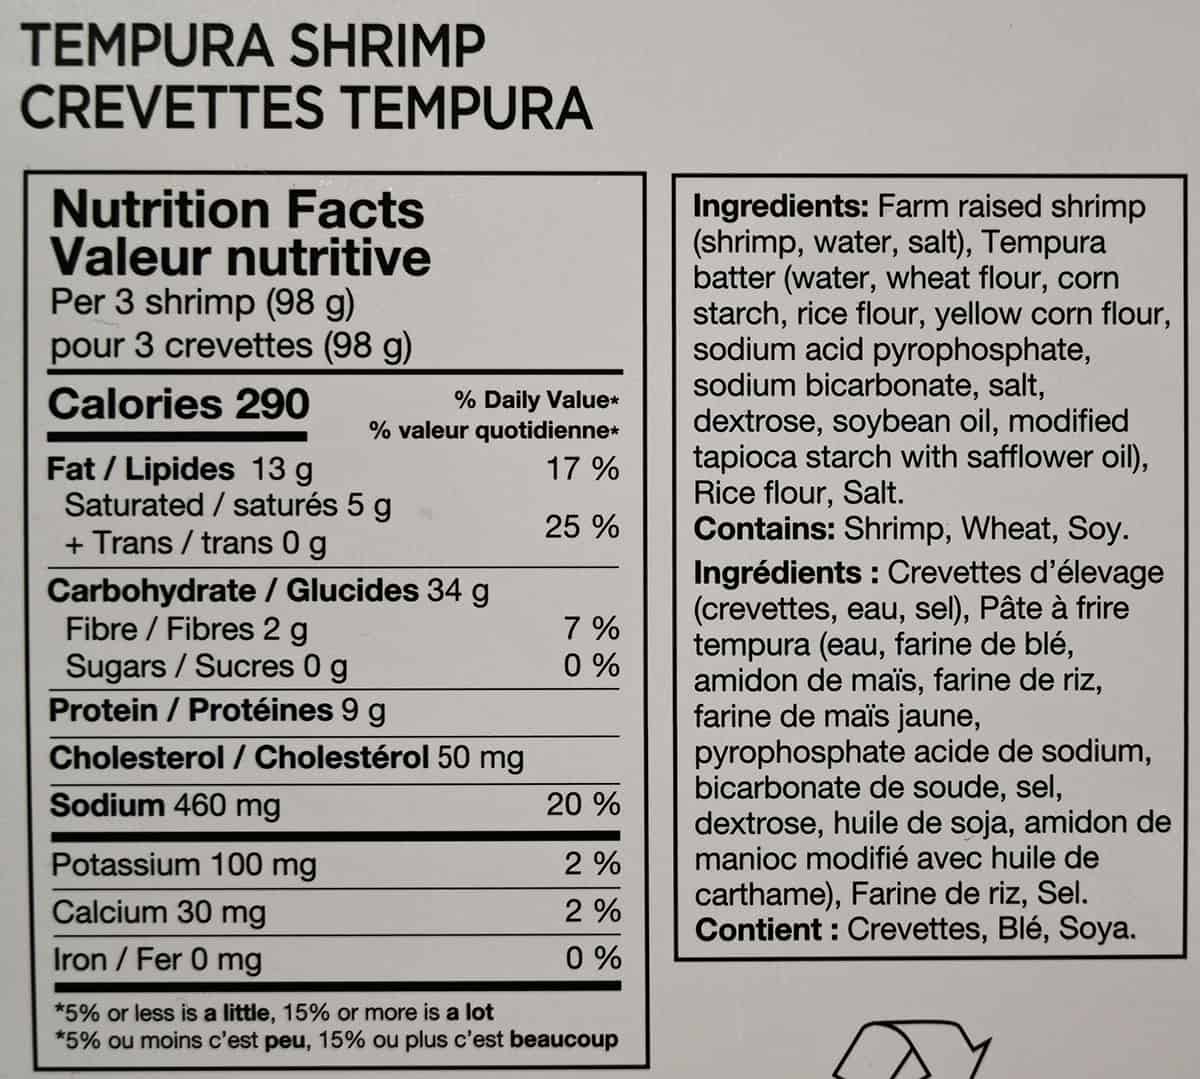 Tempura shrimp nutrition facts from the box.